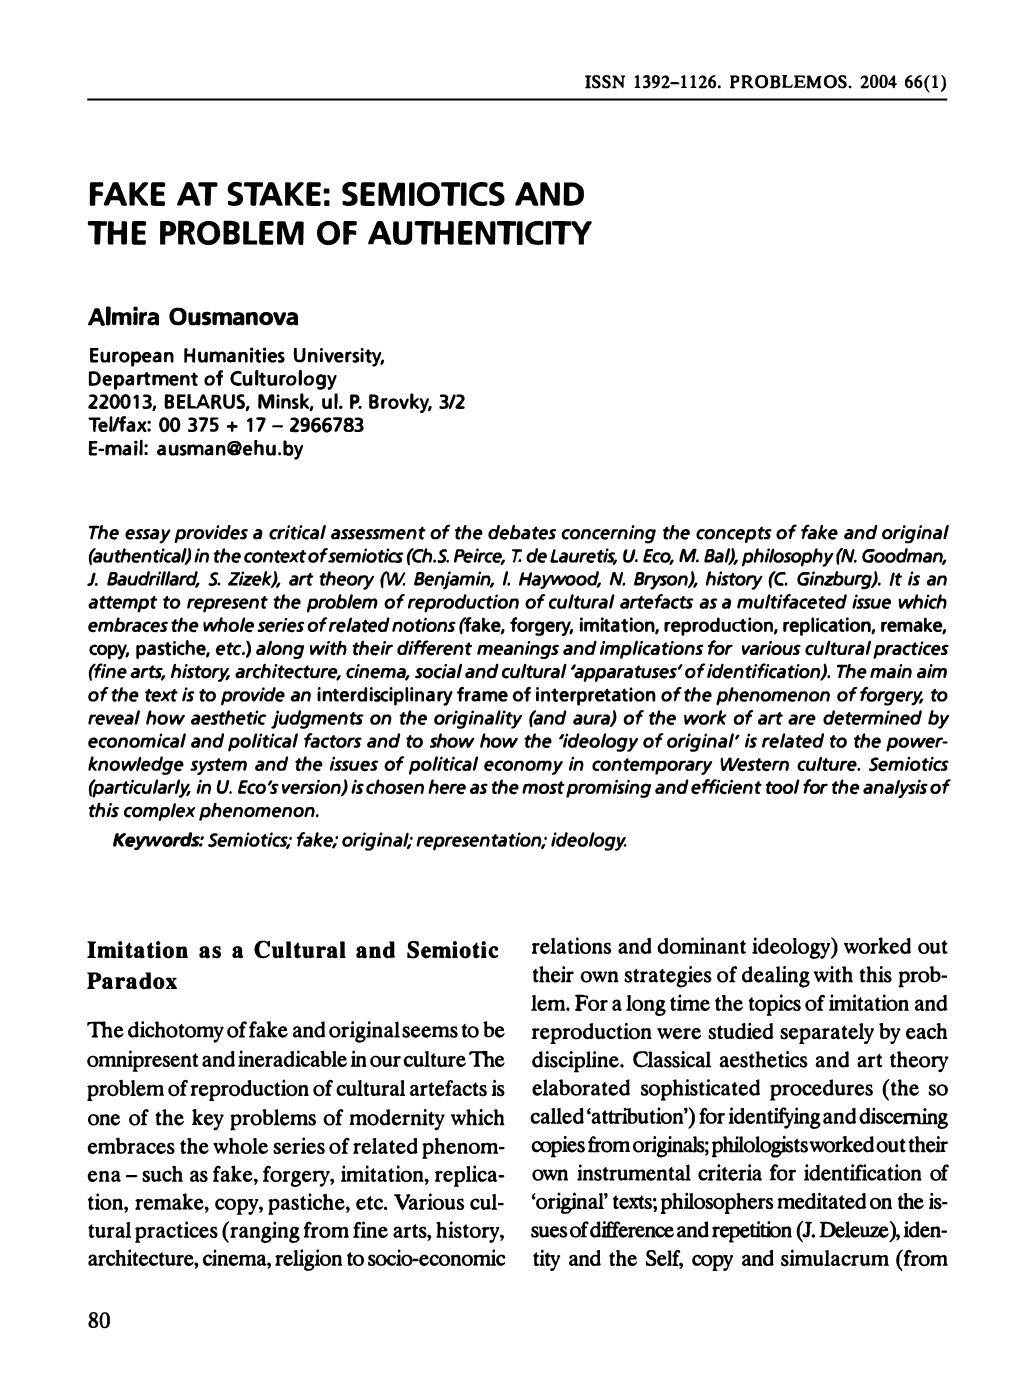 Semiotics Ano the Problem of Authenticity